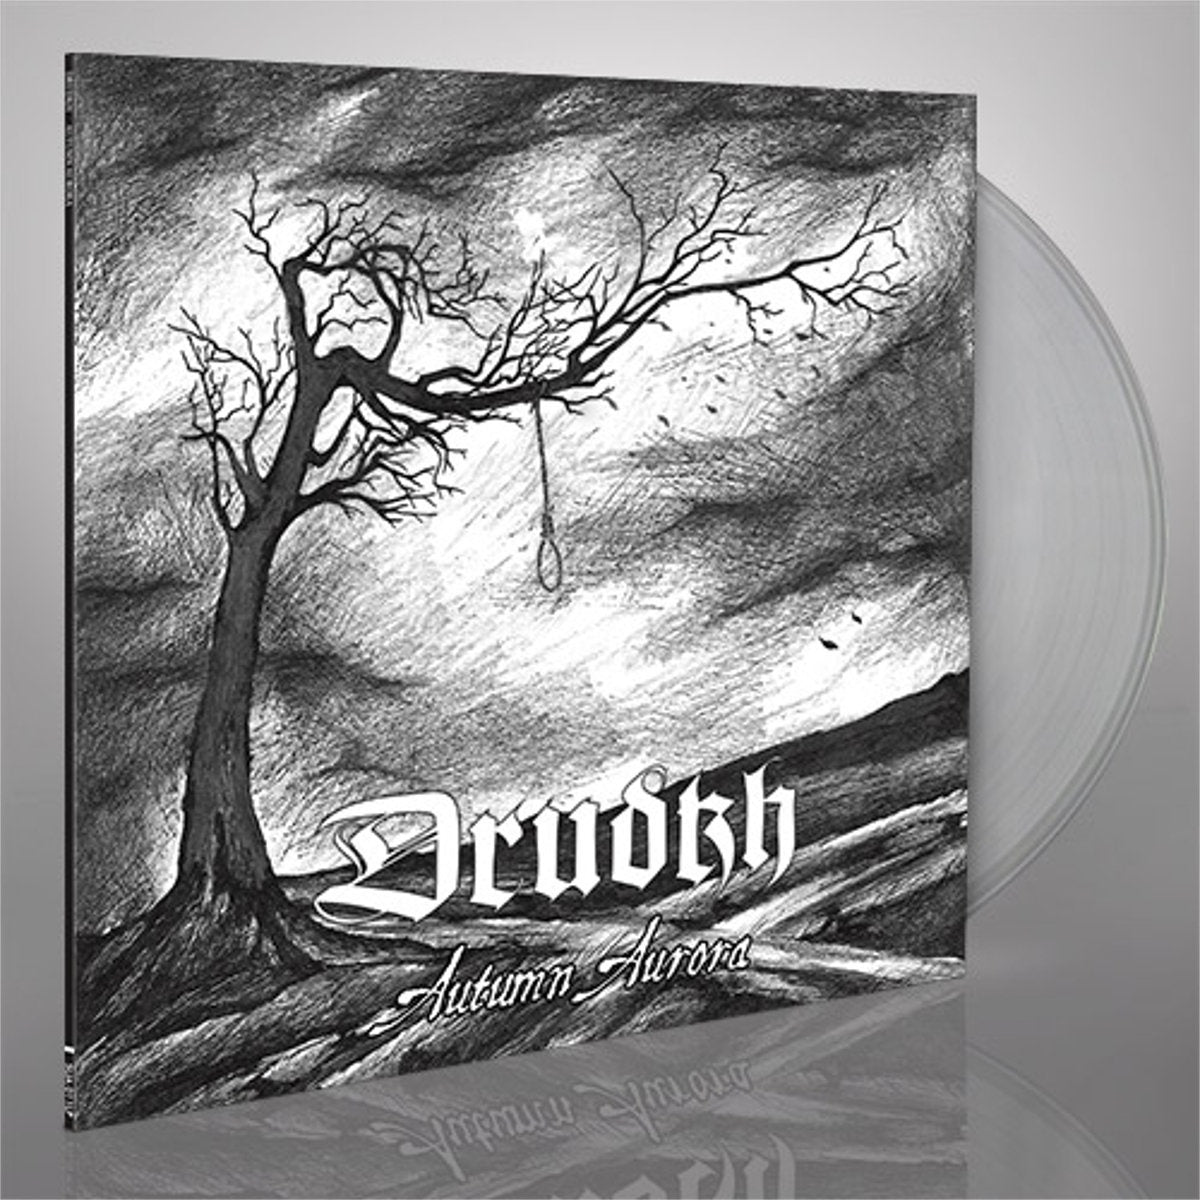 Drudkh - Autumn Aurora (2009) - New LP Record 2019 Reissue Crystal Clear Vinyl (Limited to 400) - Black Metal